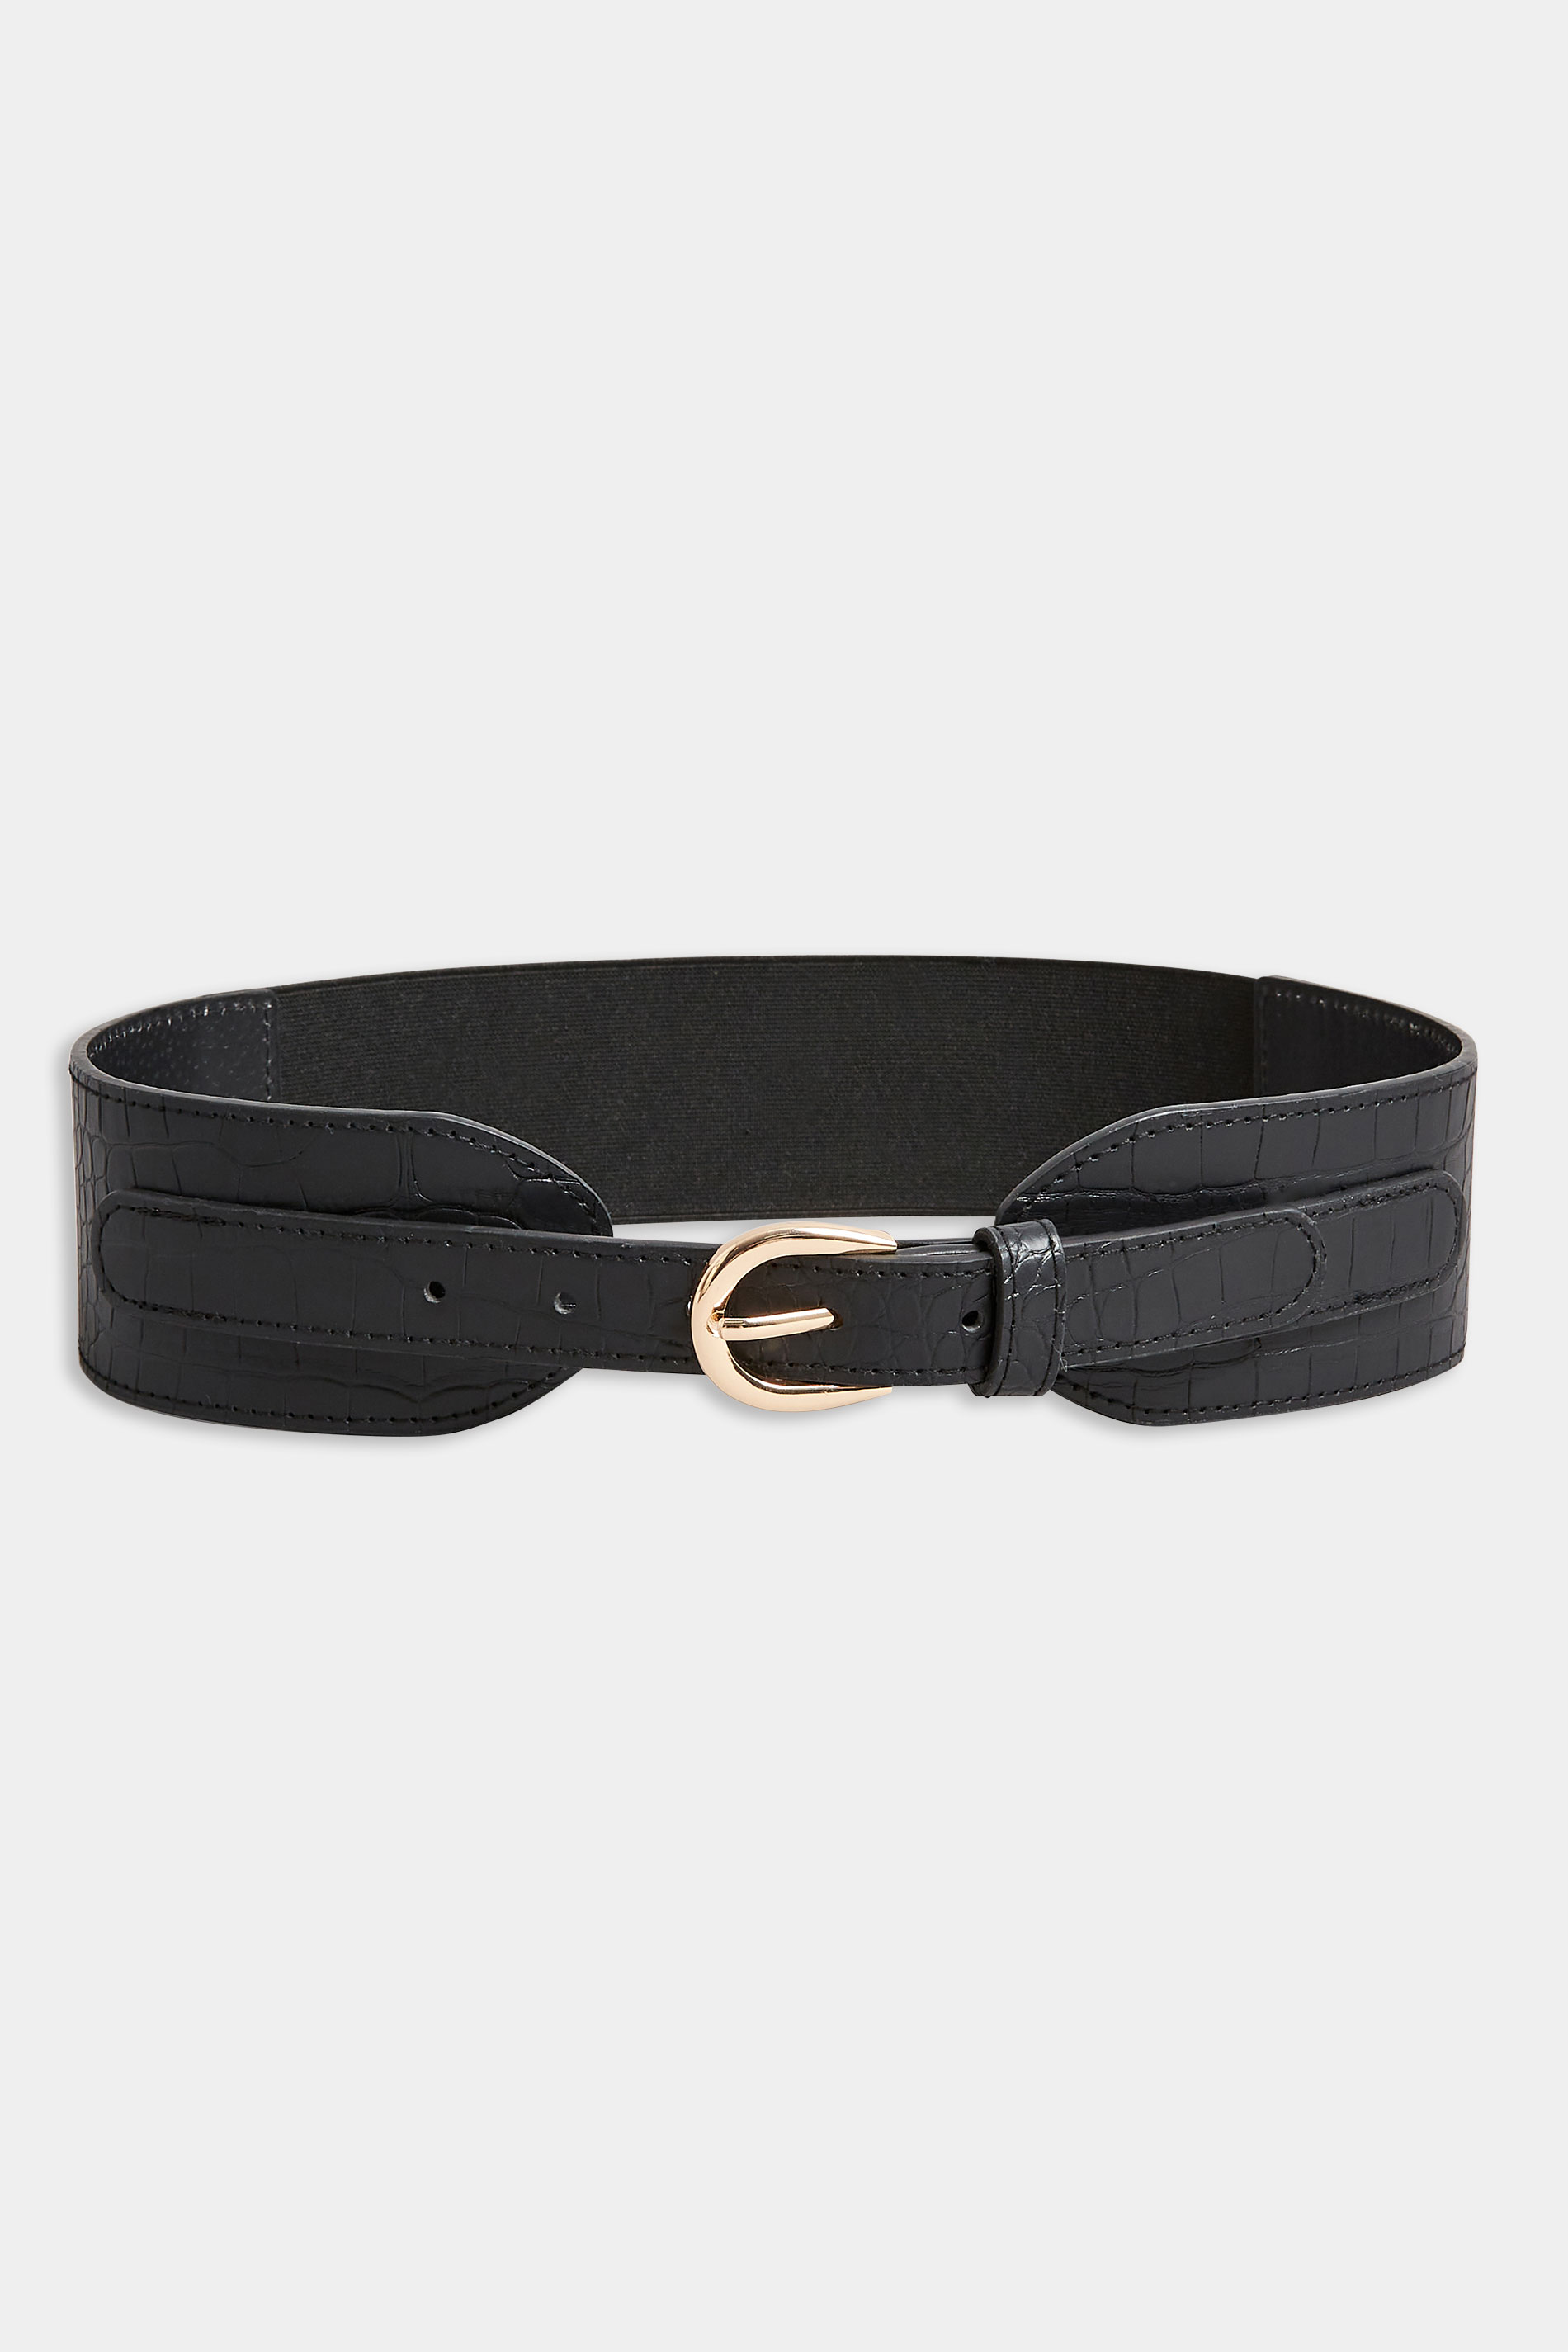 Black & Gold Croc Stretch Wide Belt | Yours Clothing 2